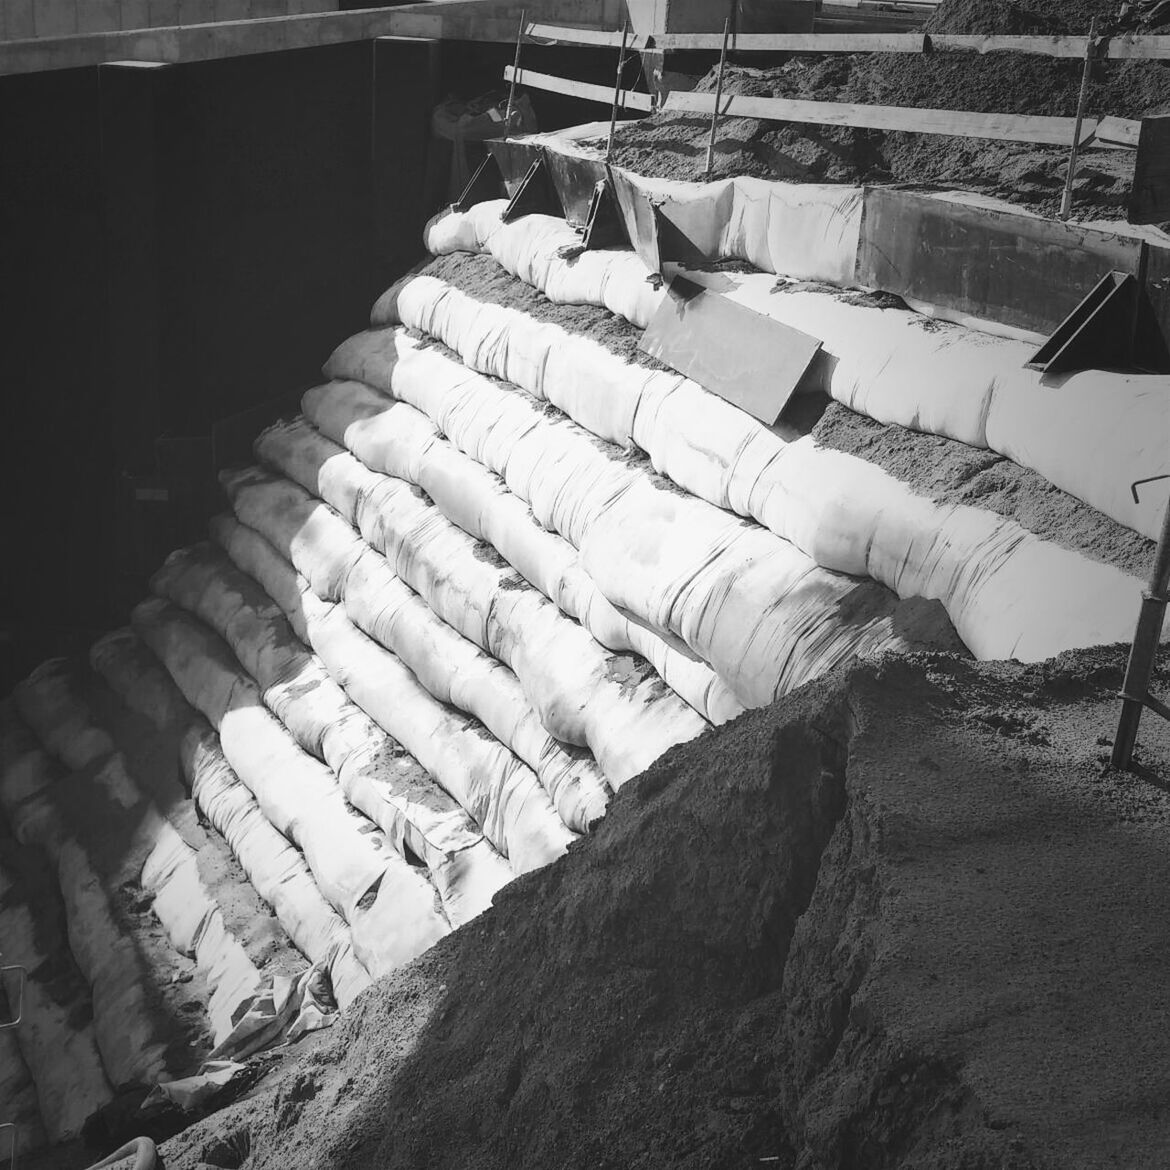 Heap of sandbags at construction site